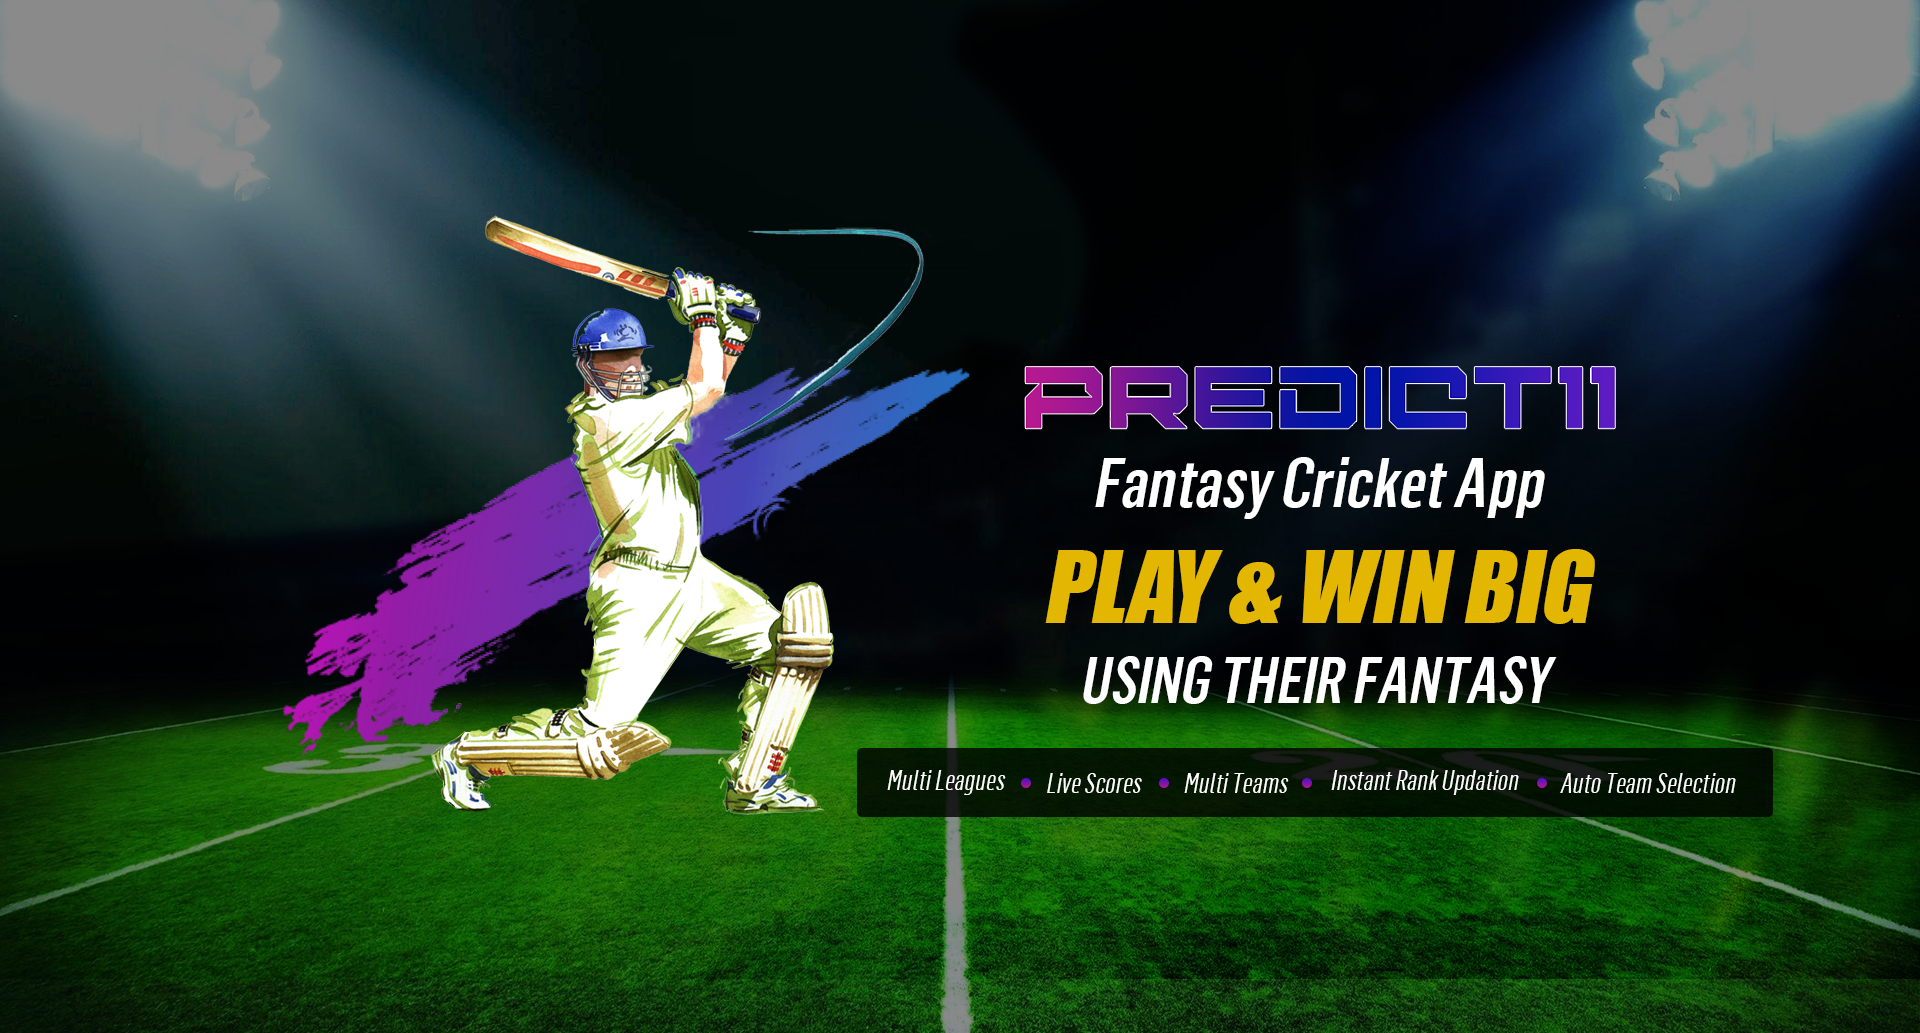 Fantasy Sports App